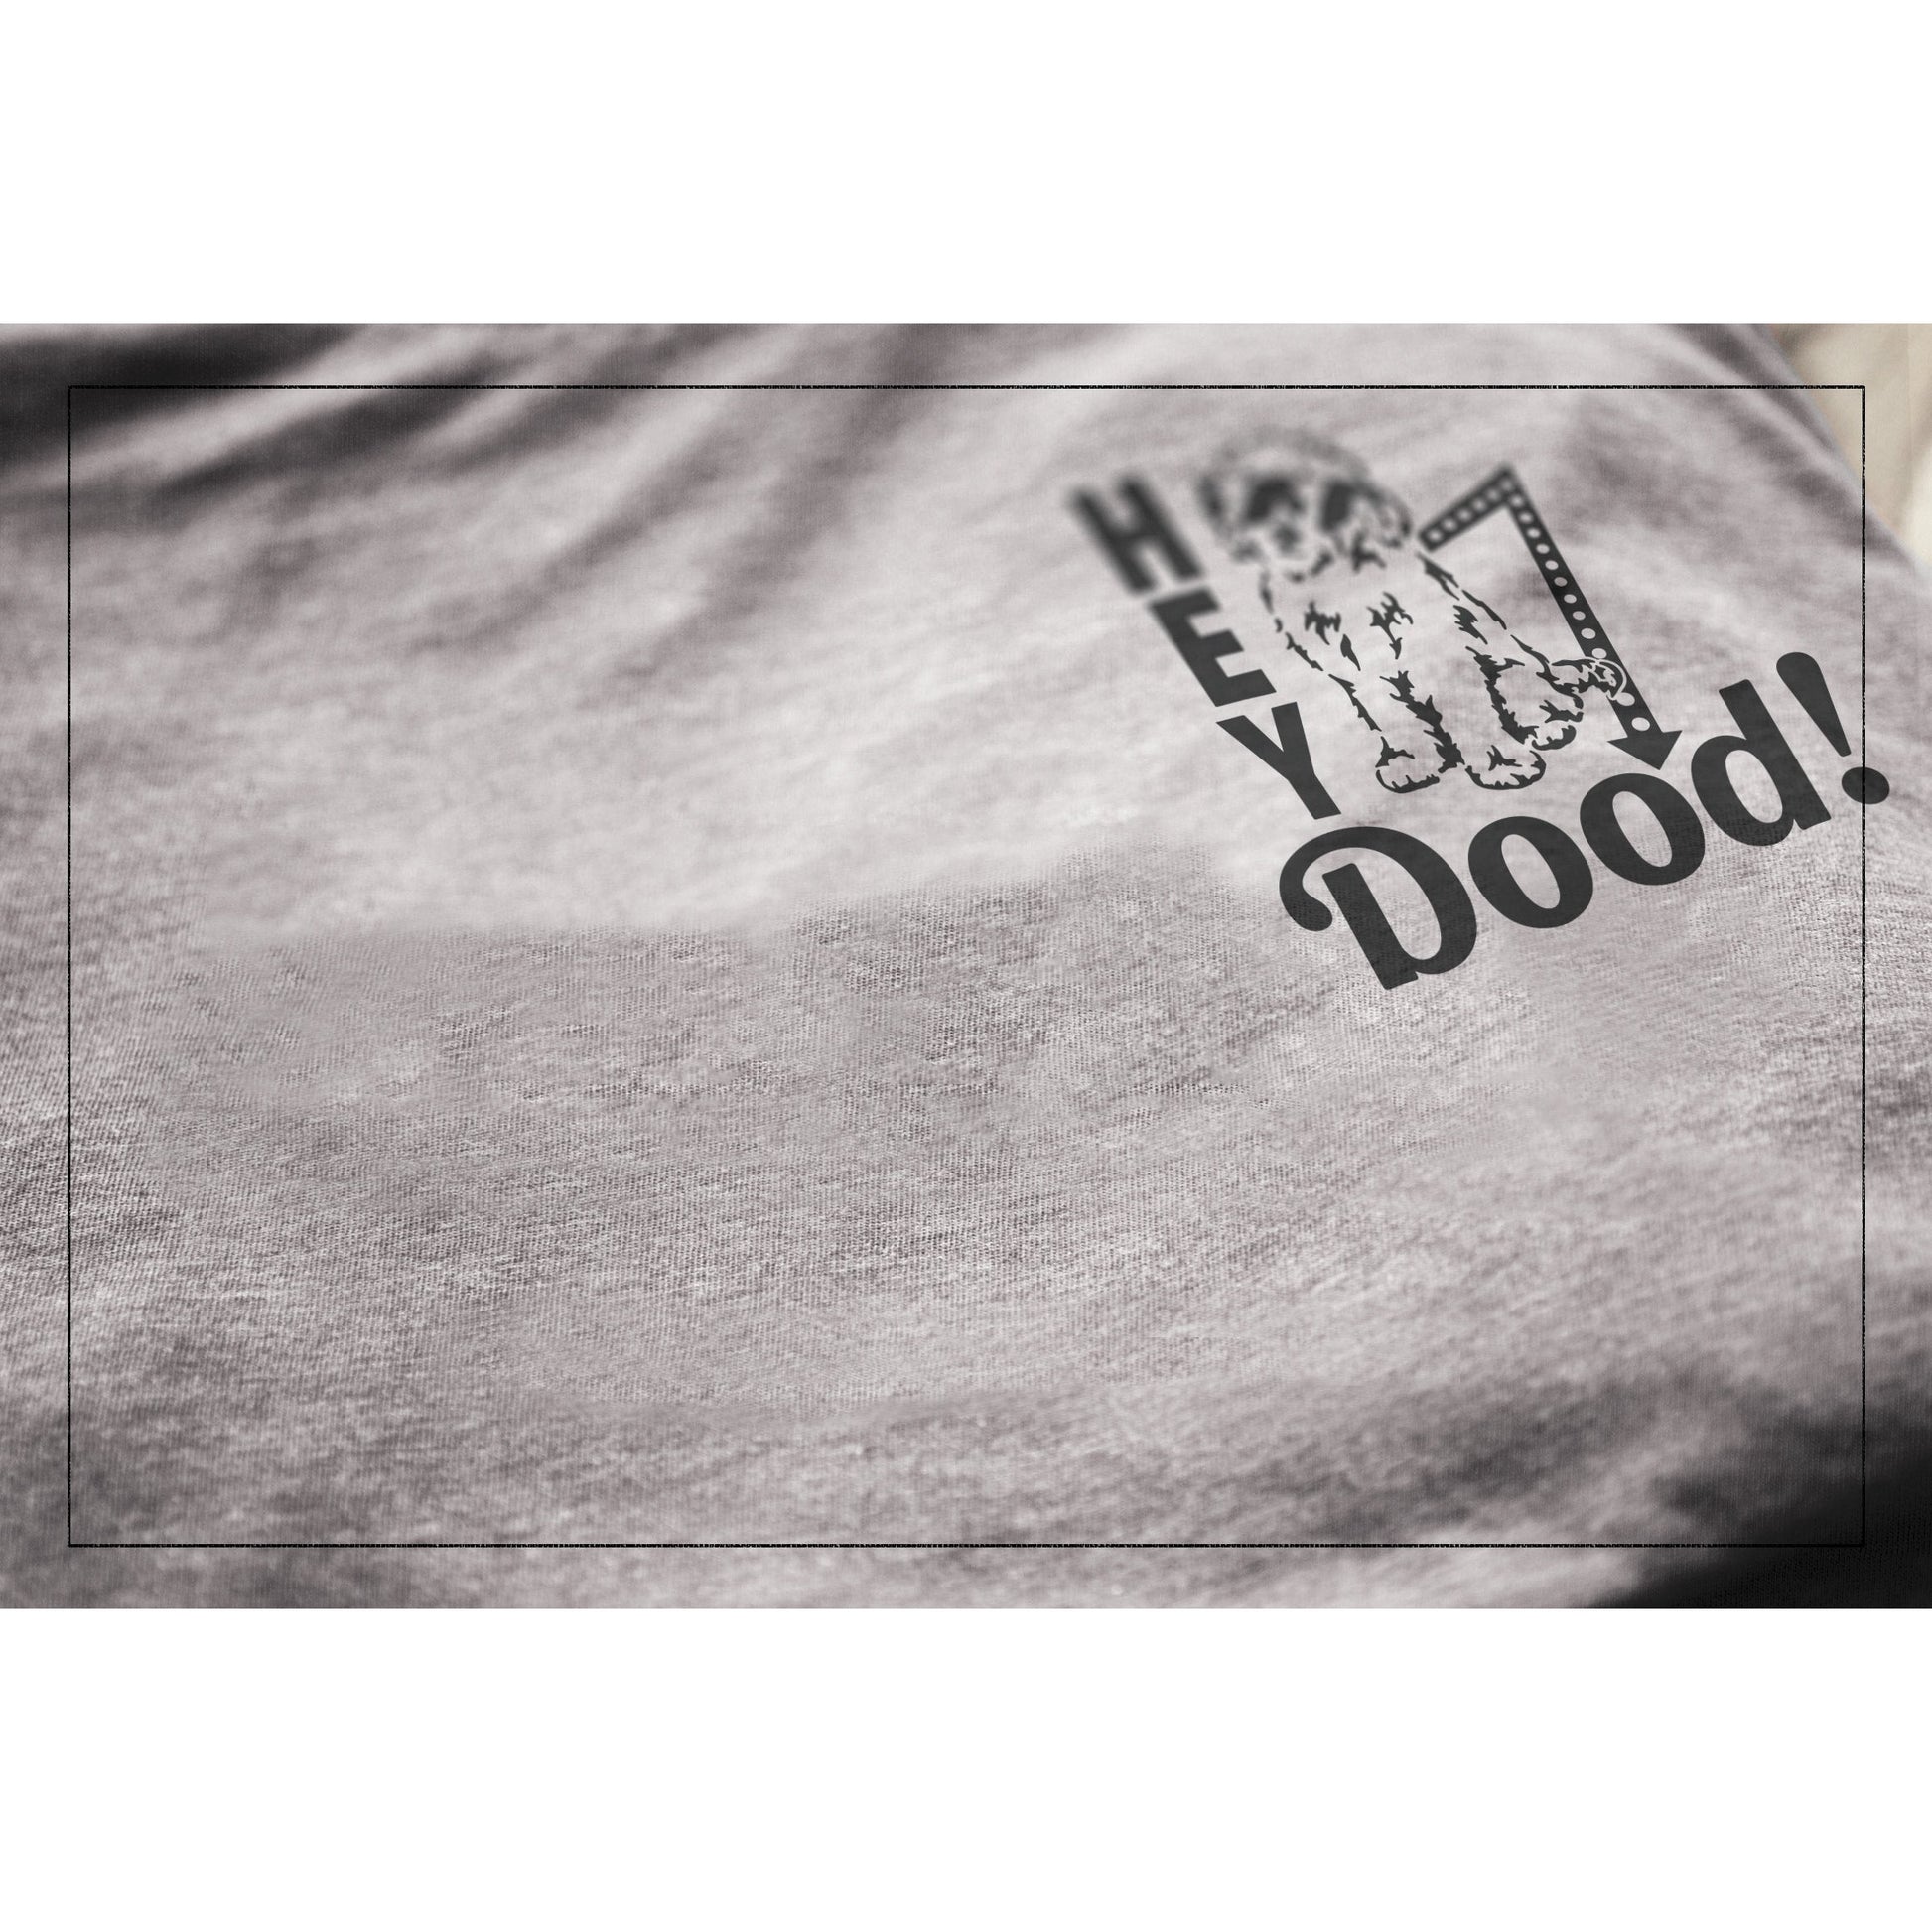 Hey Doodle Dog Heather Grey Printed Graphic Men's Crew T-Shirt Closeup Details